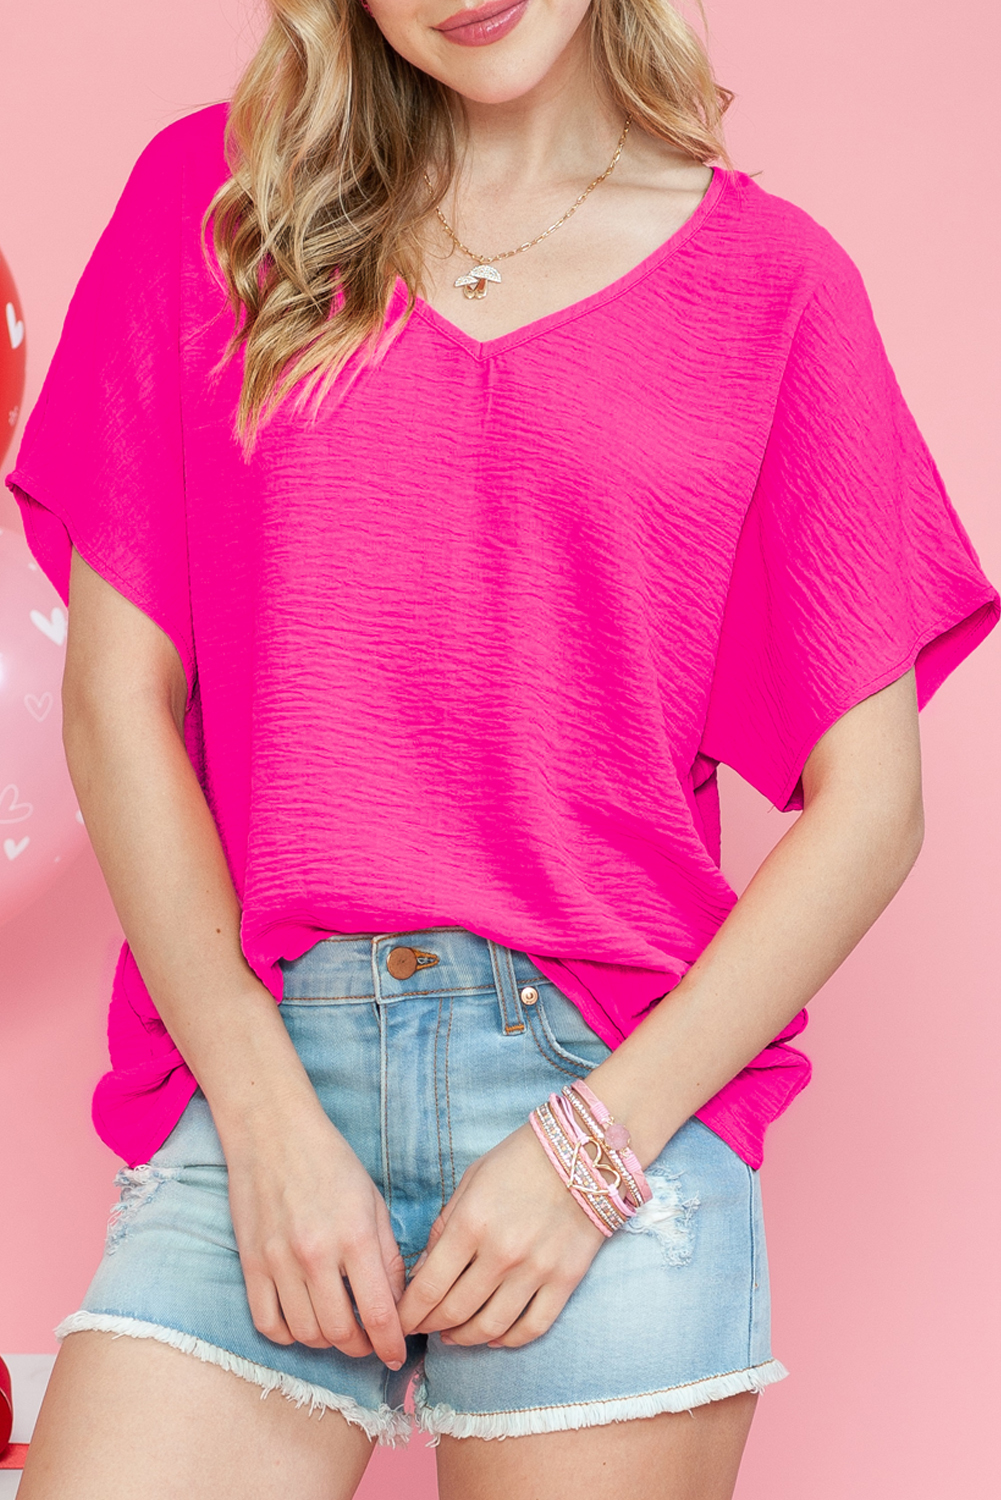 Shewin Wholesale CLOTHING Stores Rose Basic Solid Color V Neck Short Sleeve Blouse